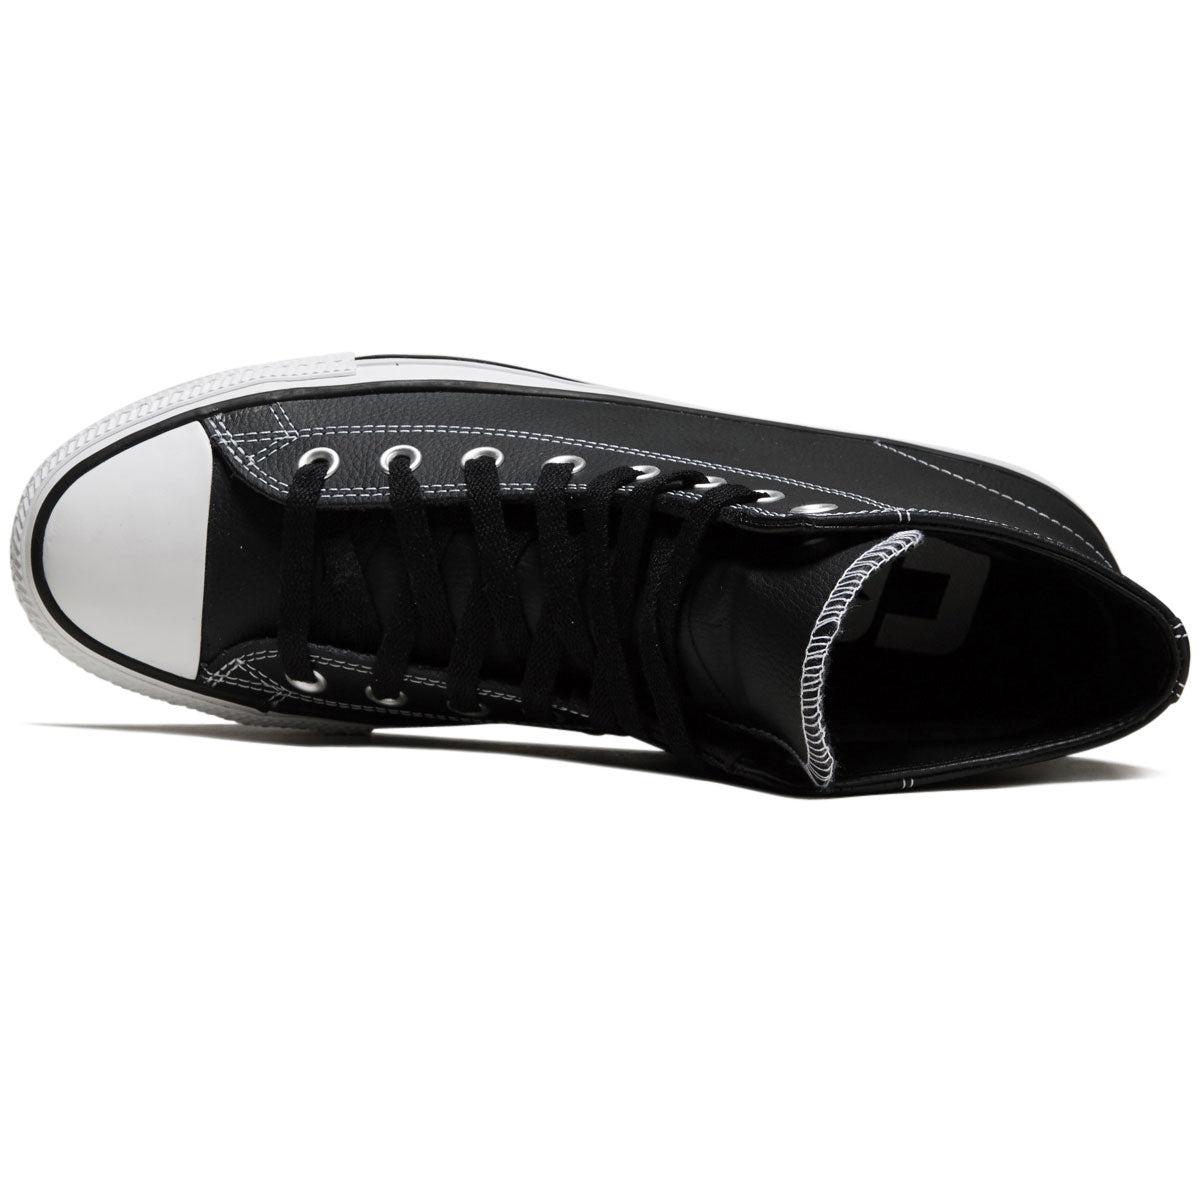 Converse Ctas Pro Hi Shoes - Black/White/Black 2023 image 3